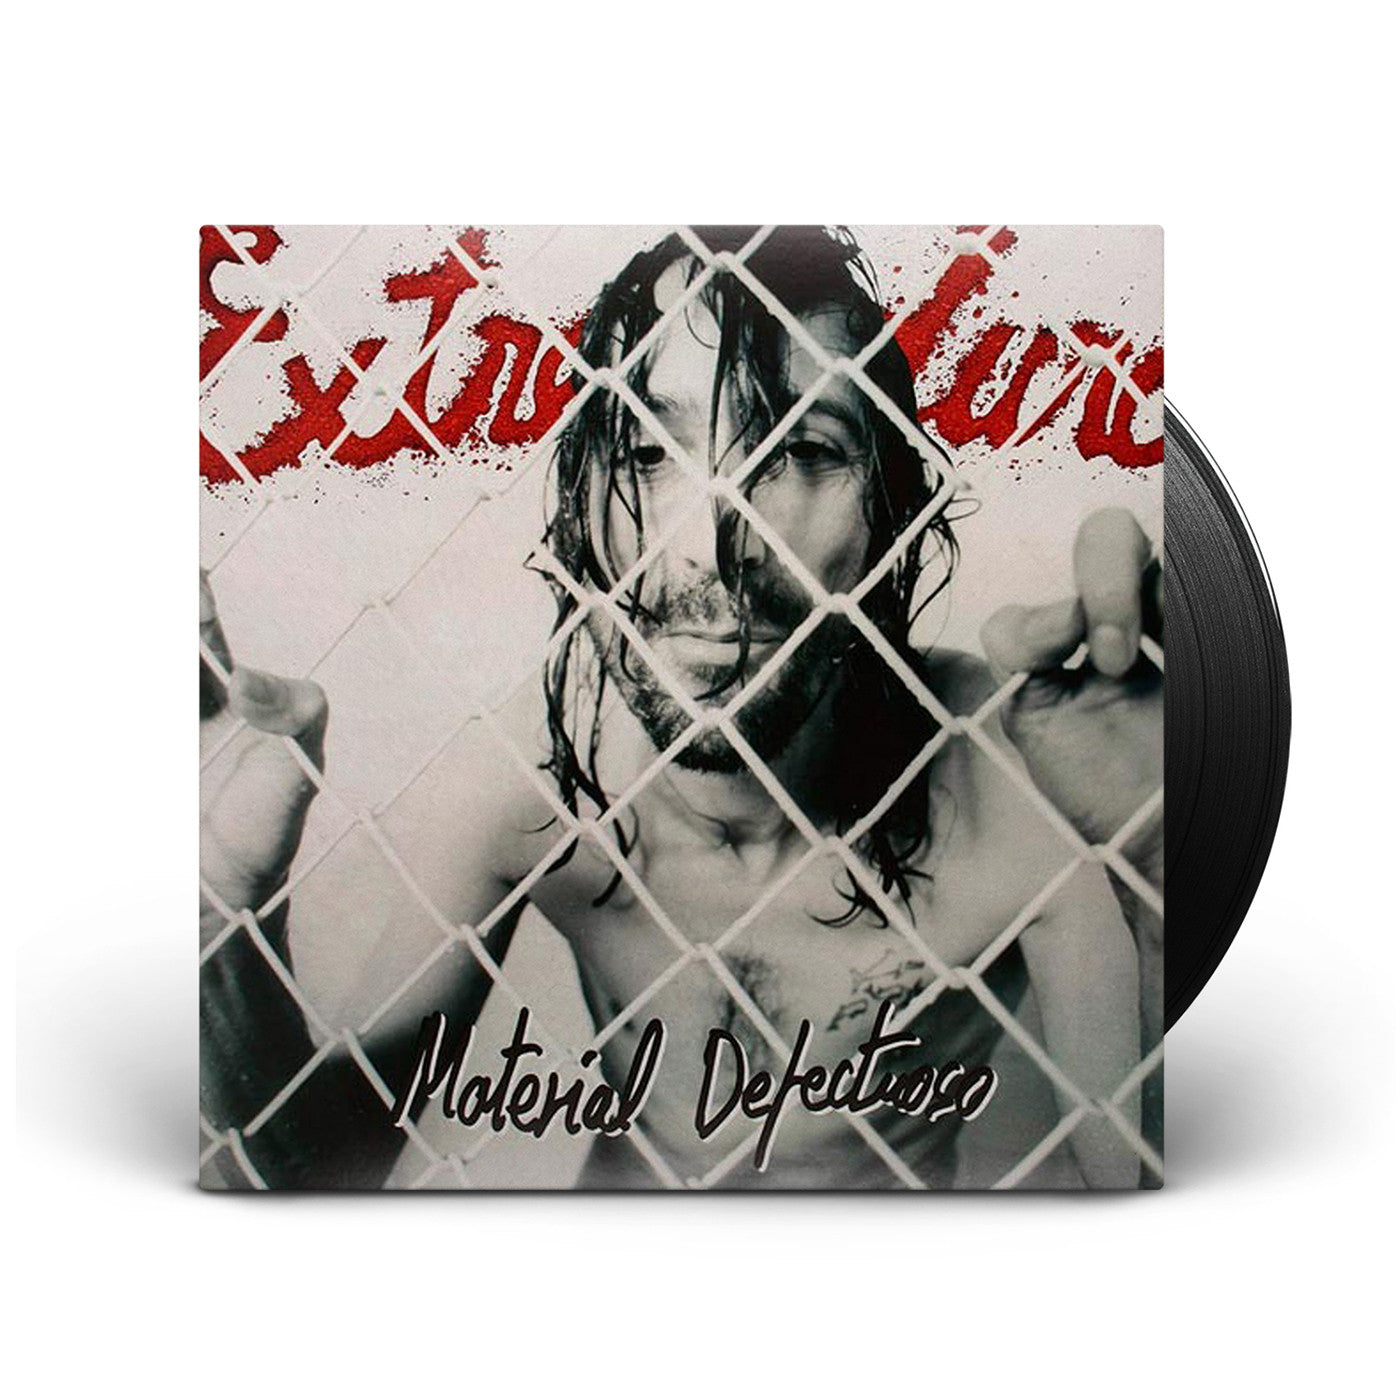 Extremoduro la lay innata vinilo 180g LP + CD rock robe iniesta punk  barricada